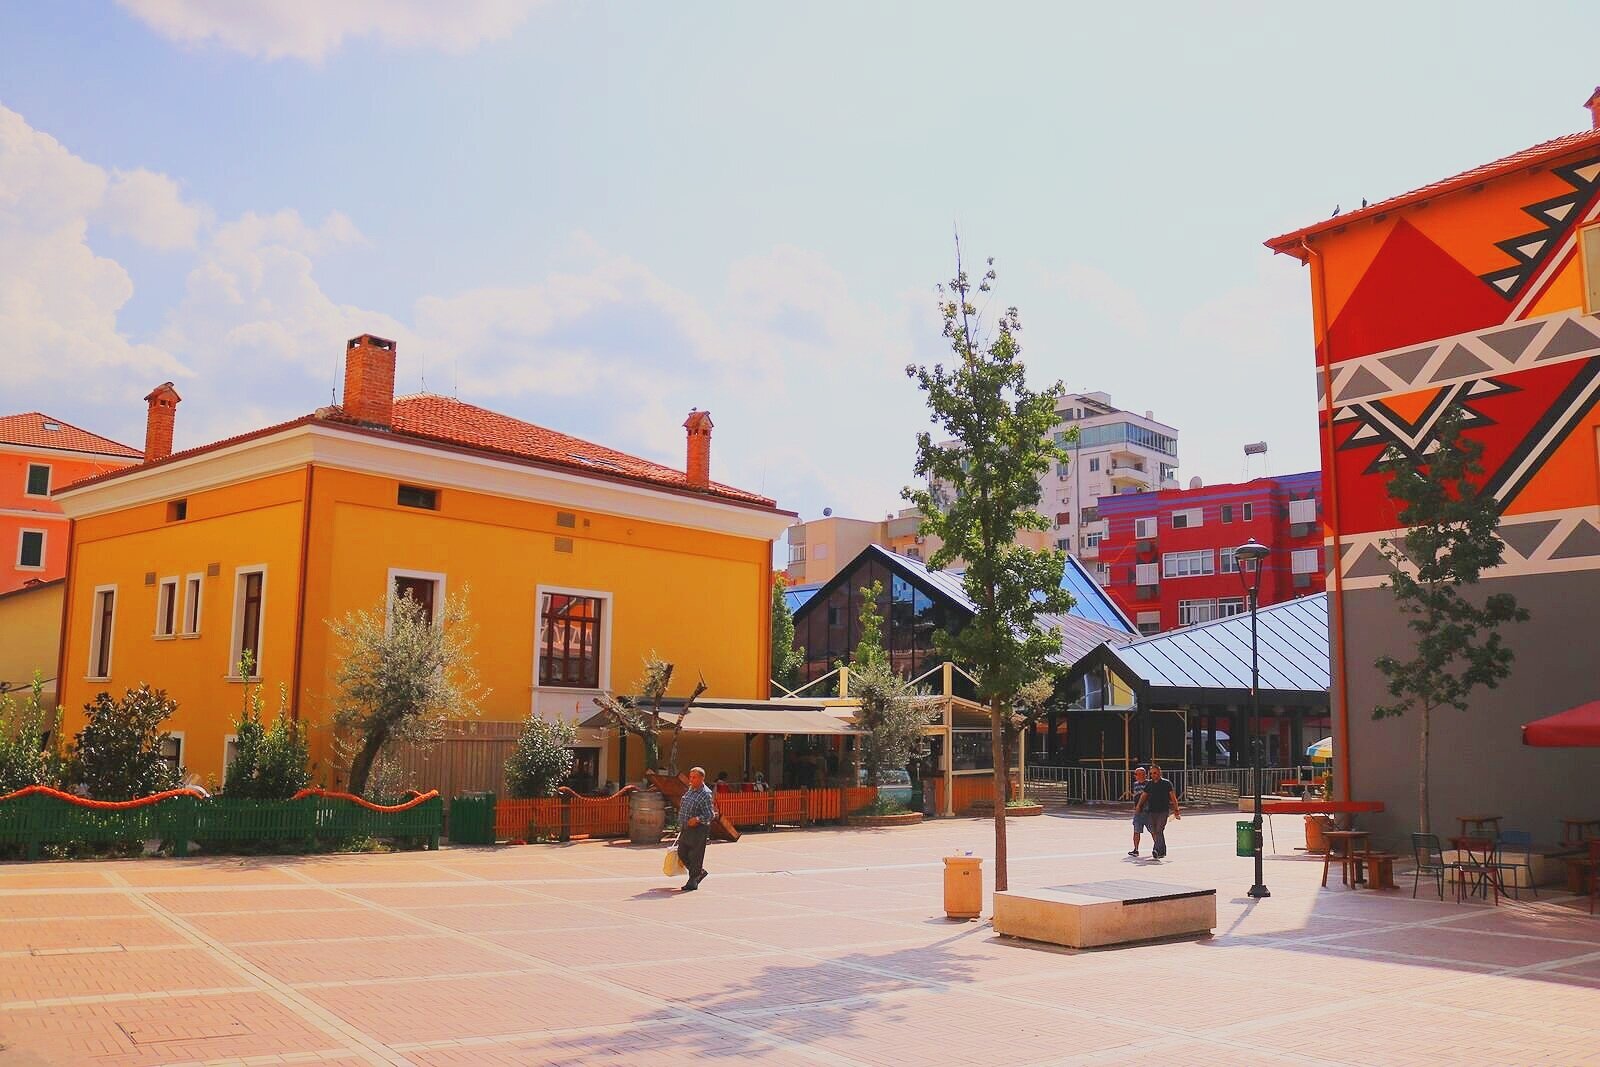 Pazari i Ri neighbourhood in the main square